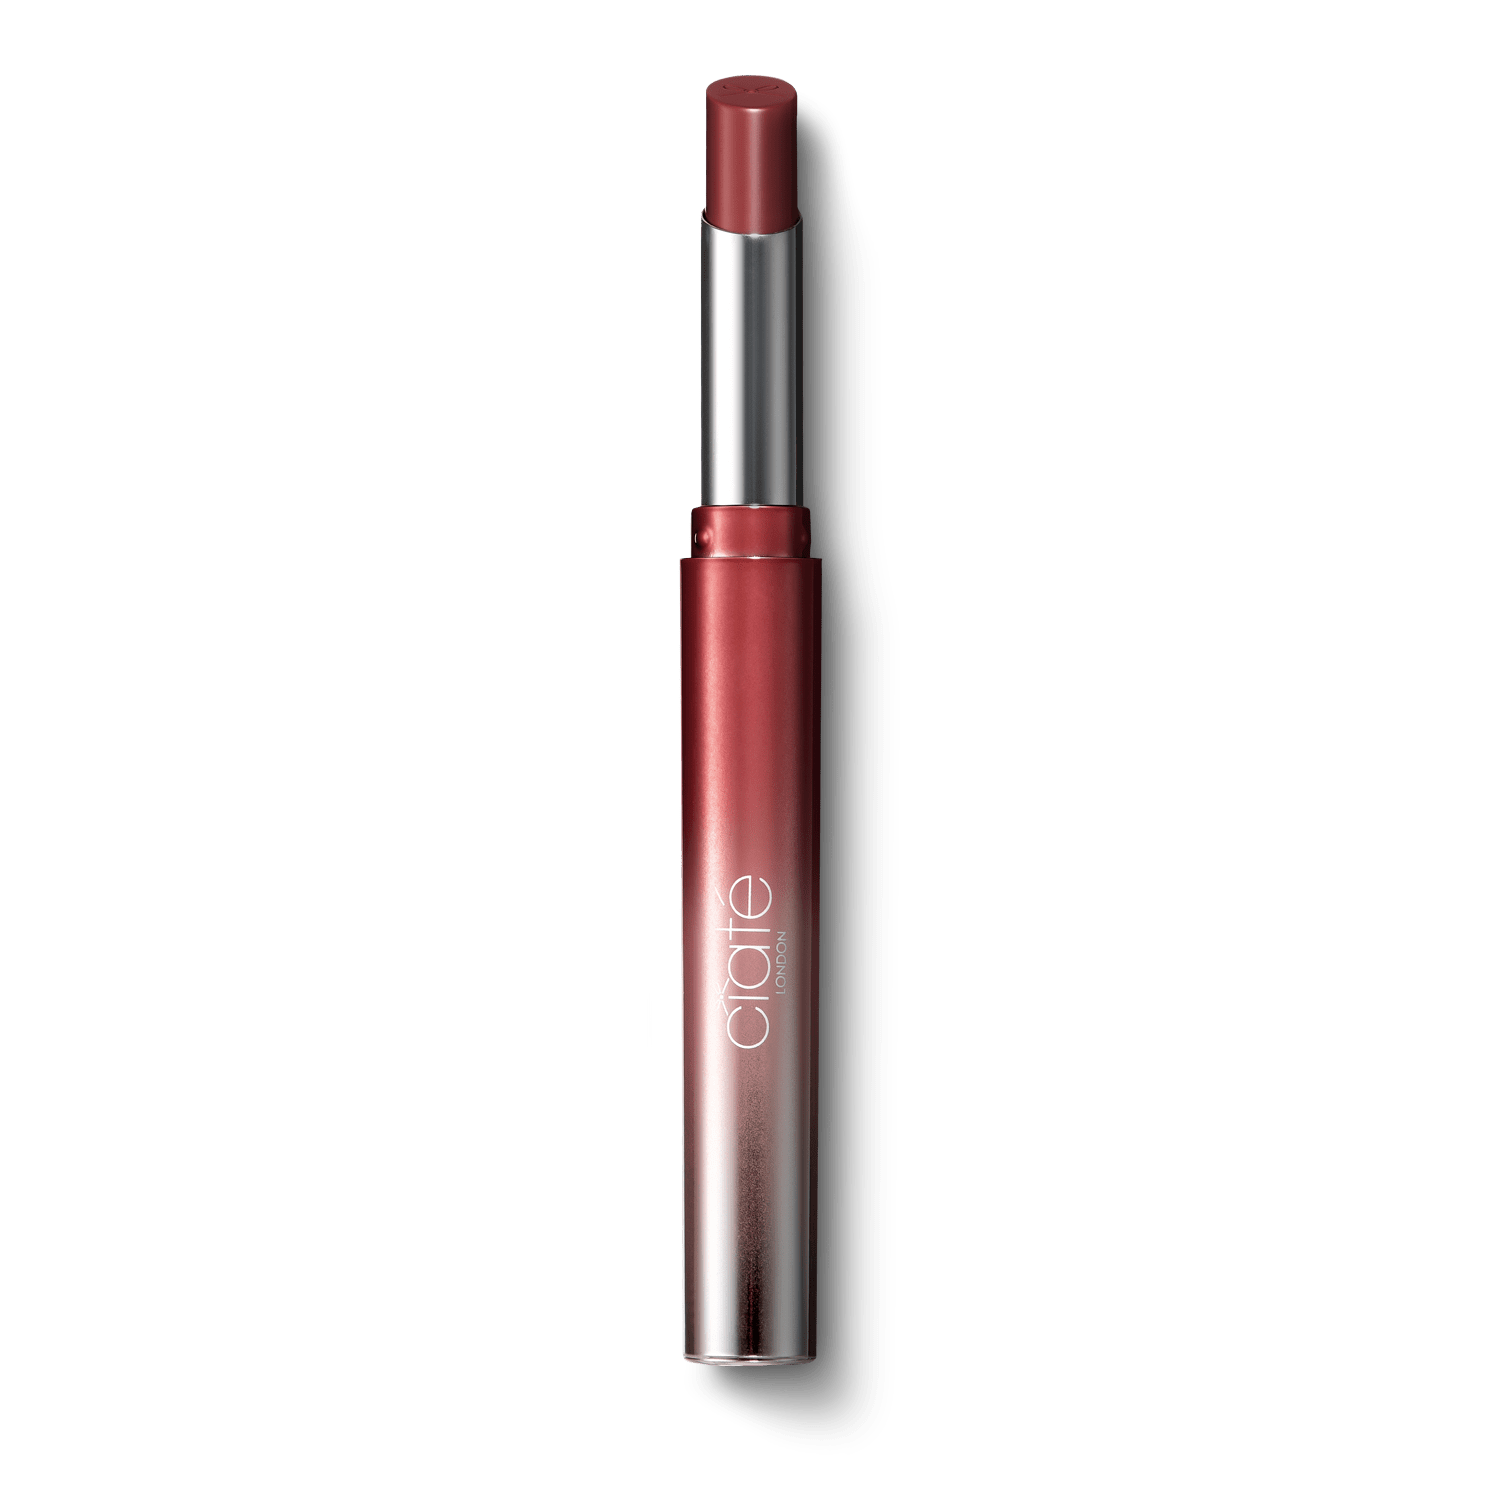 Wonderwand Lipstick Muse - Soft Berry Colour Cosmetics Ciaté London